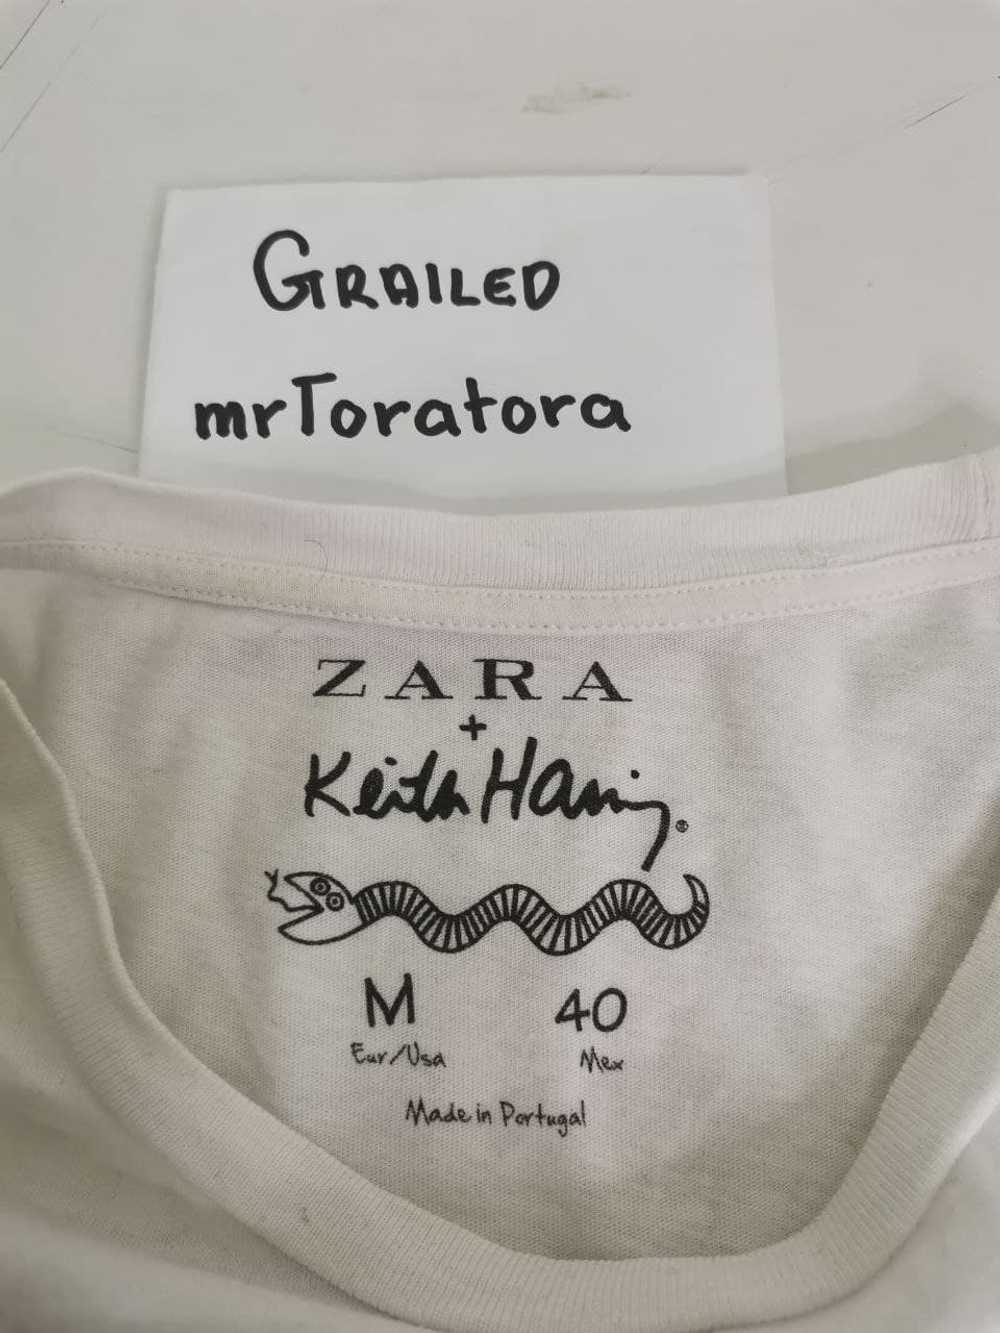 Zara - Zara X Keith Haring Art Rare Design - image 6